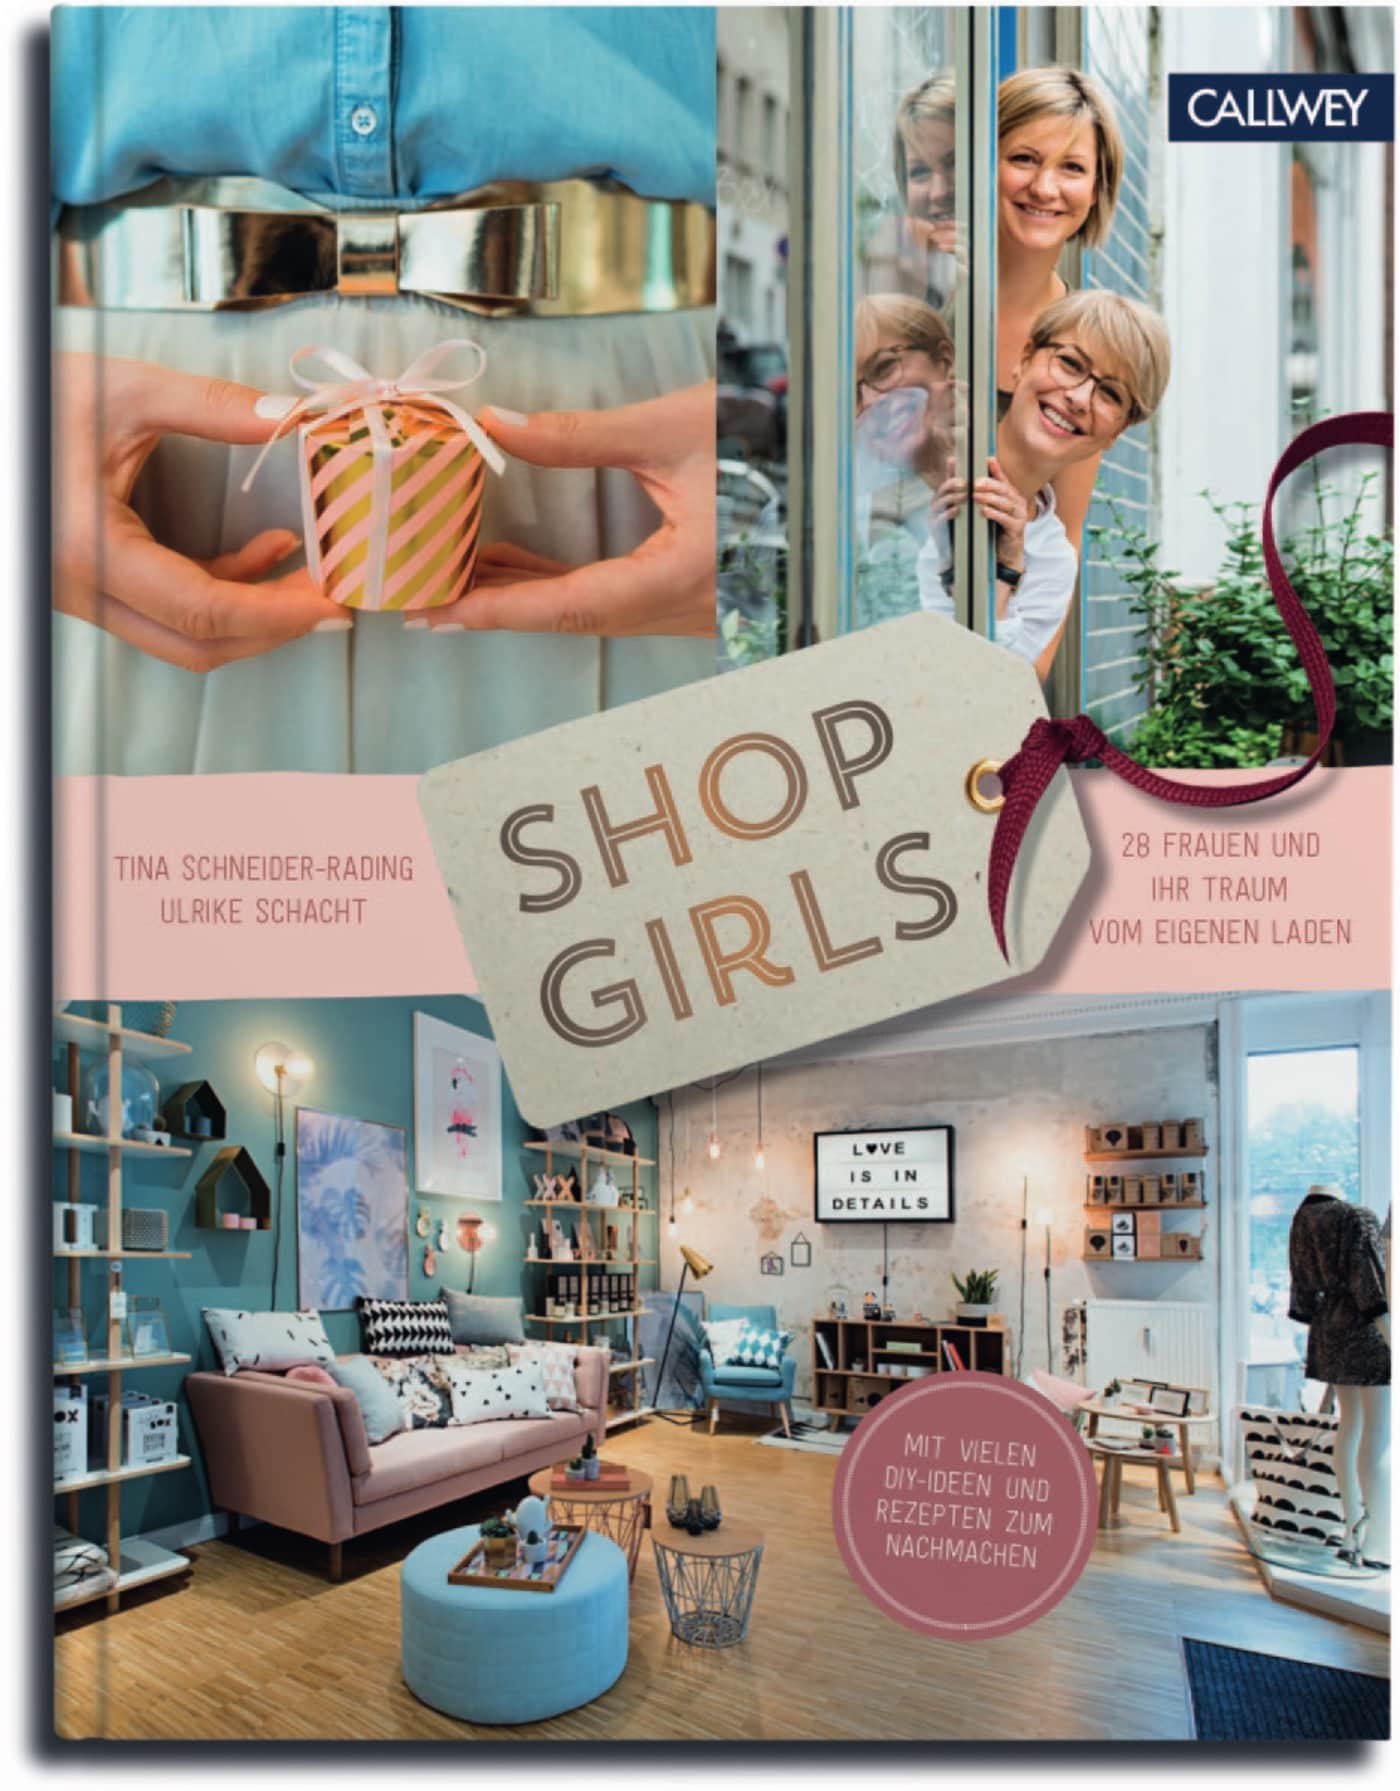 Shop Girls Buch mit tollen Shop- un d DIY-Ideen // HIMBEER